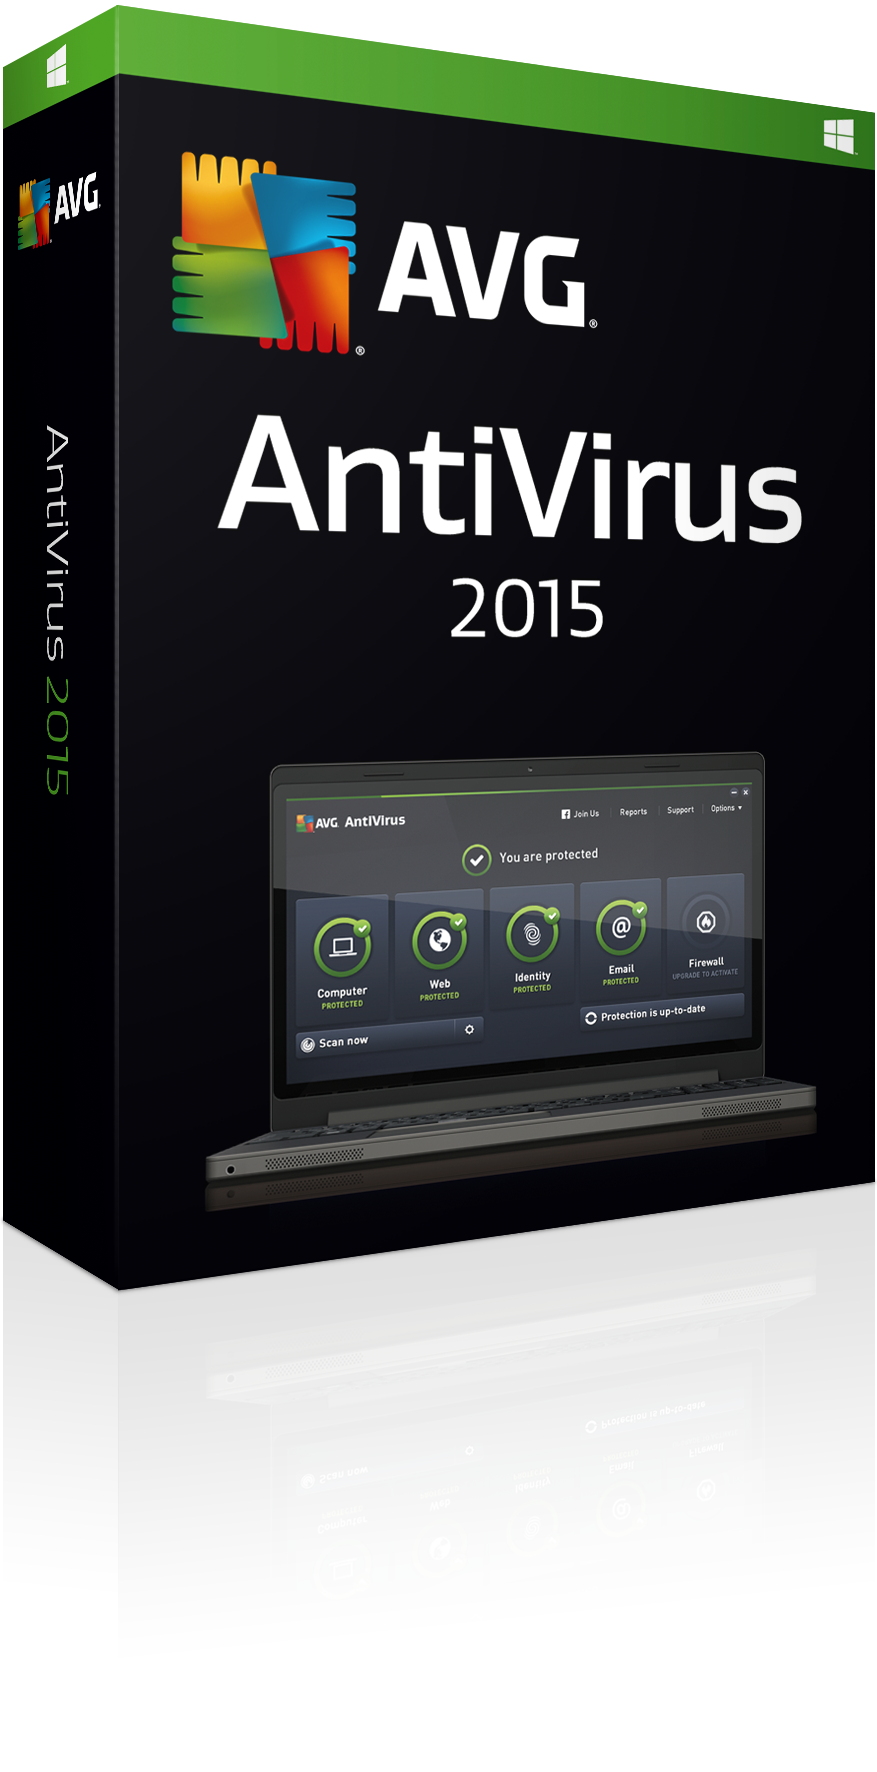 AVG AntiVirus Clear (AVG Remover) 23.10.8563 download the new version for windows